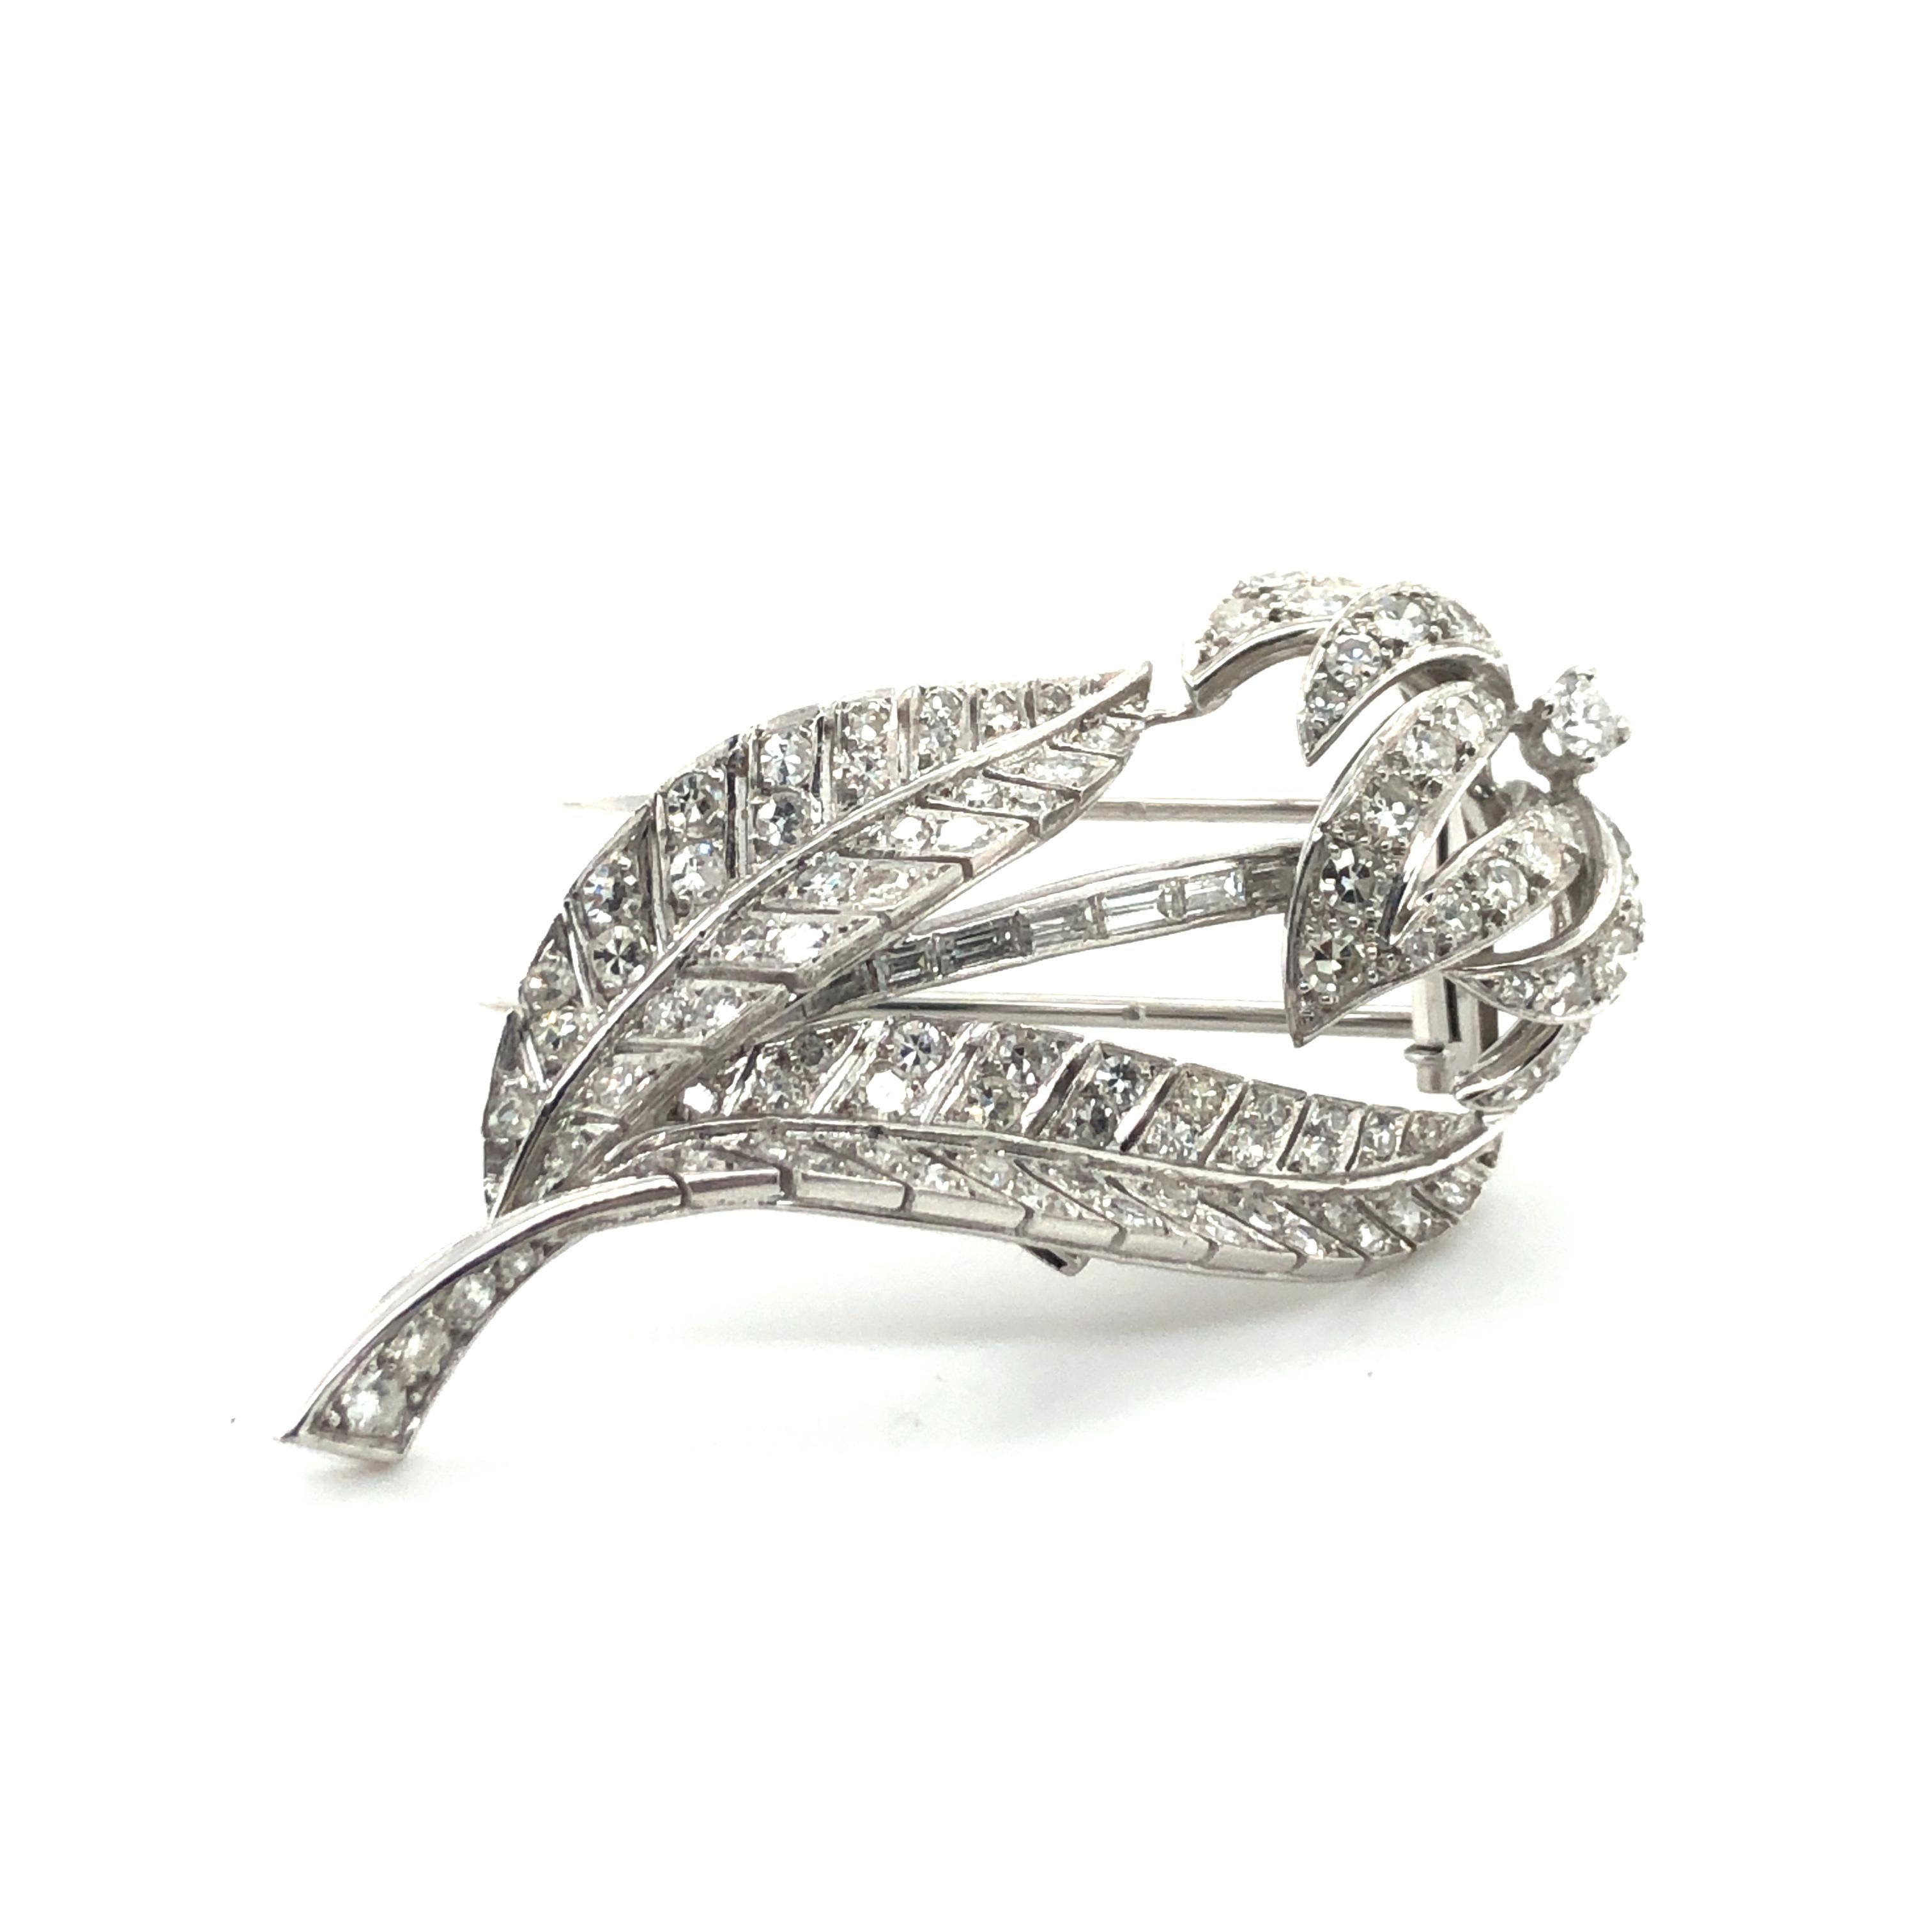 Art Deco Style Diamond Brooch in Platinum 950 1